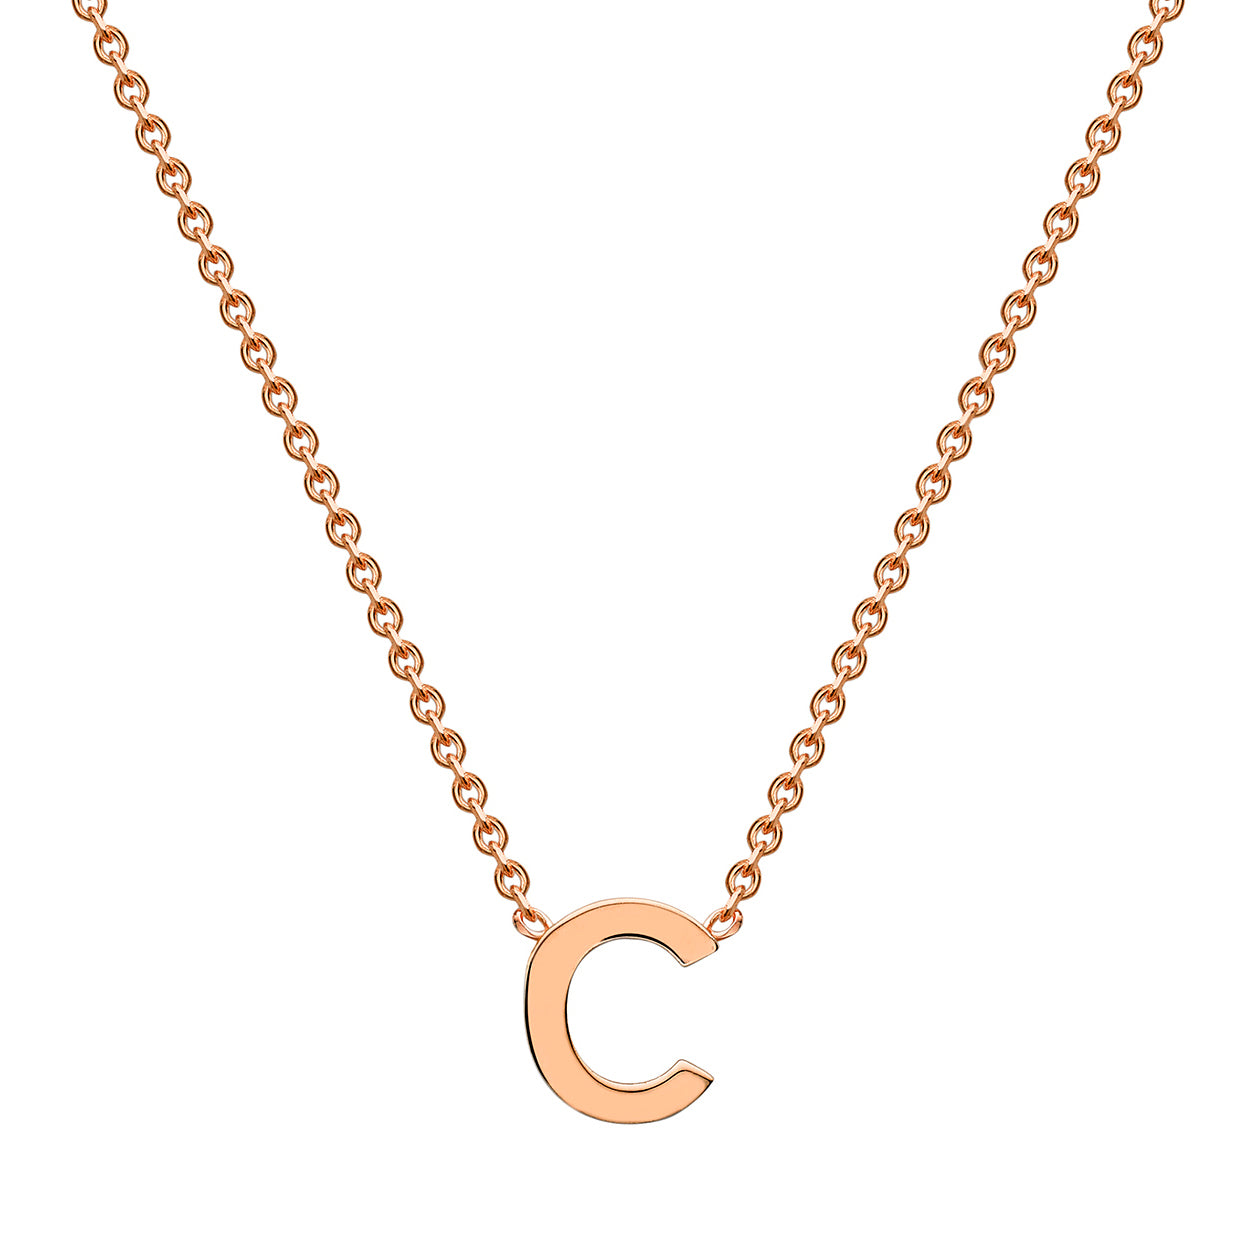 9ct Rose Gold Petite Initial C Necklace